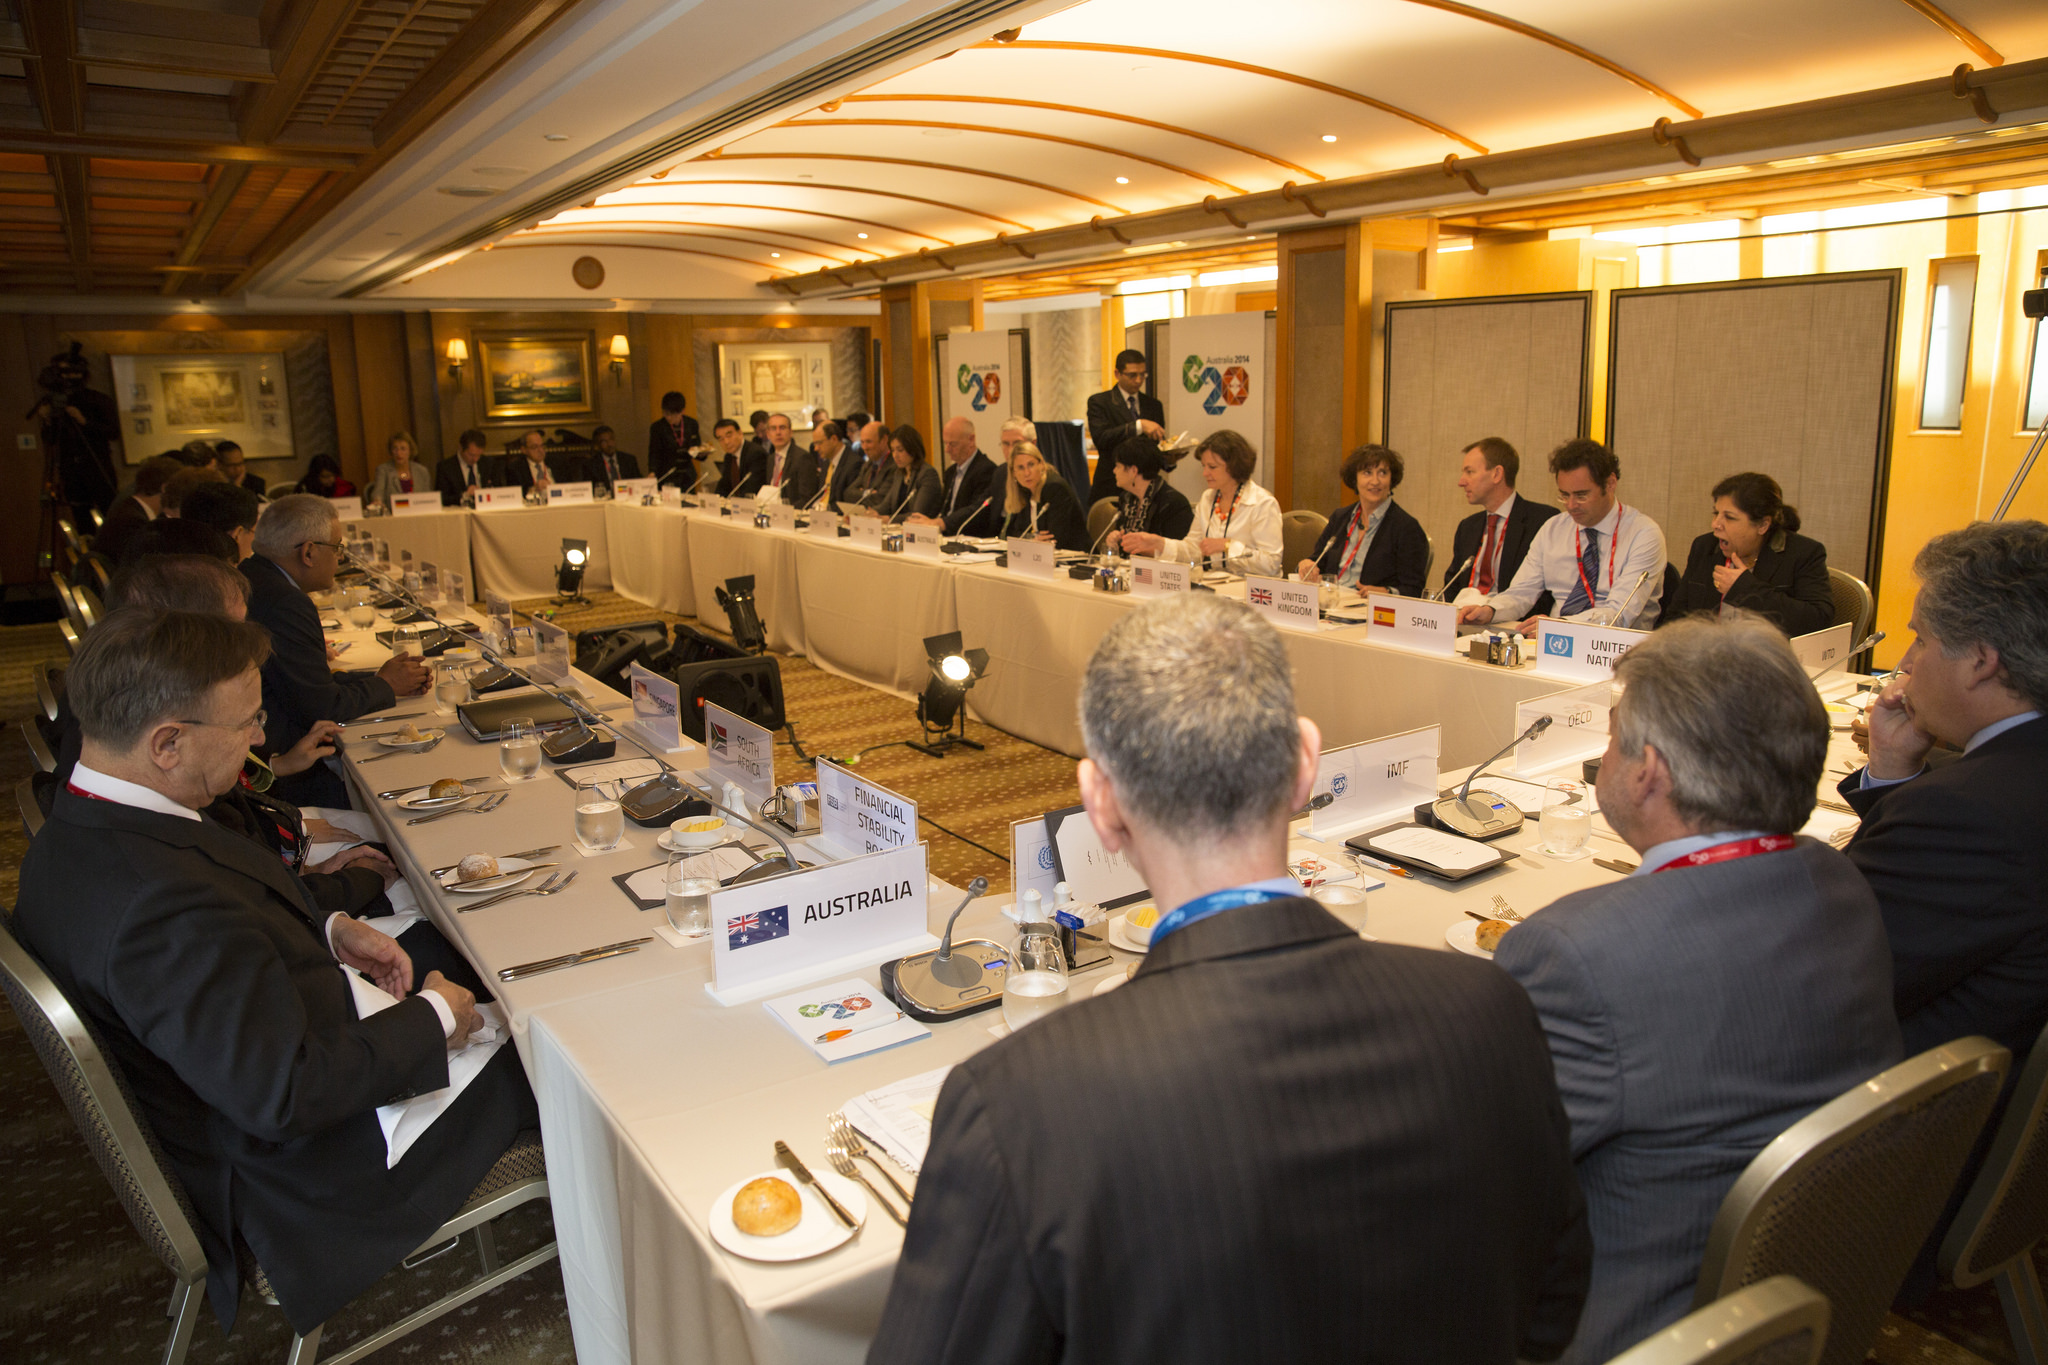 g20 sherpa meeting 2013